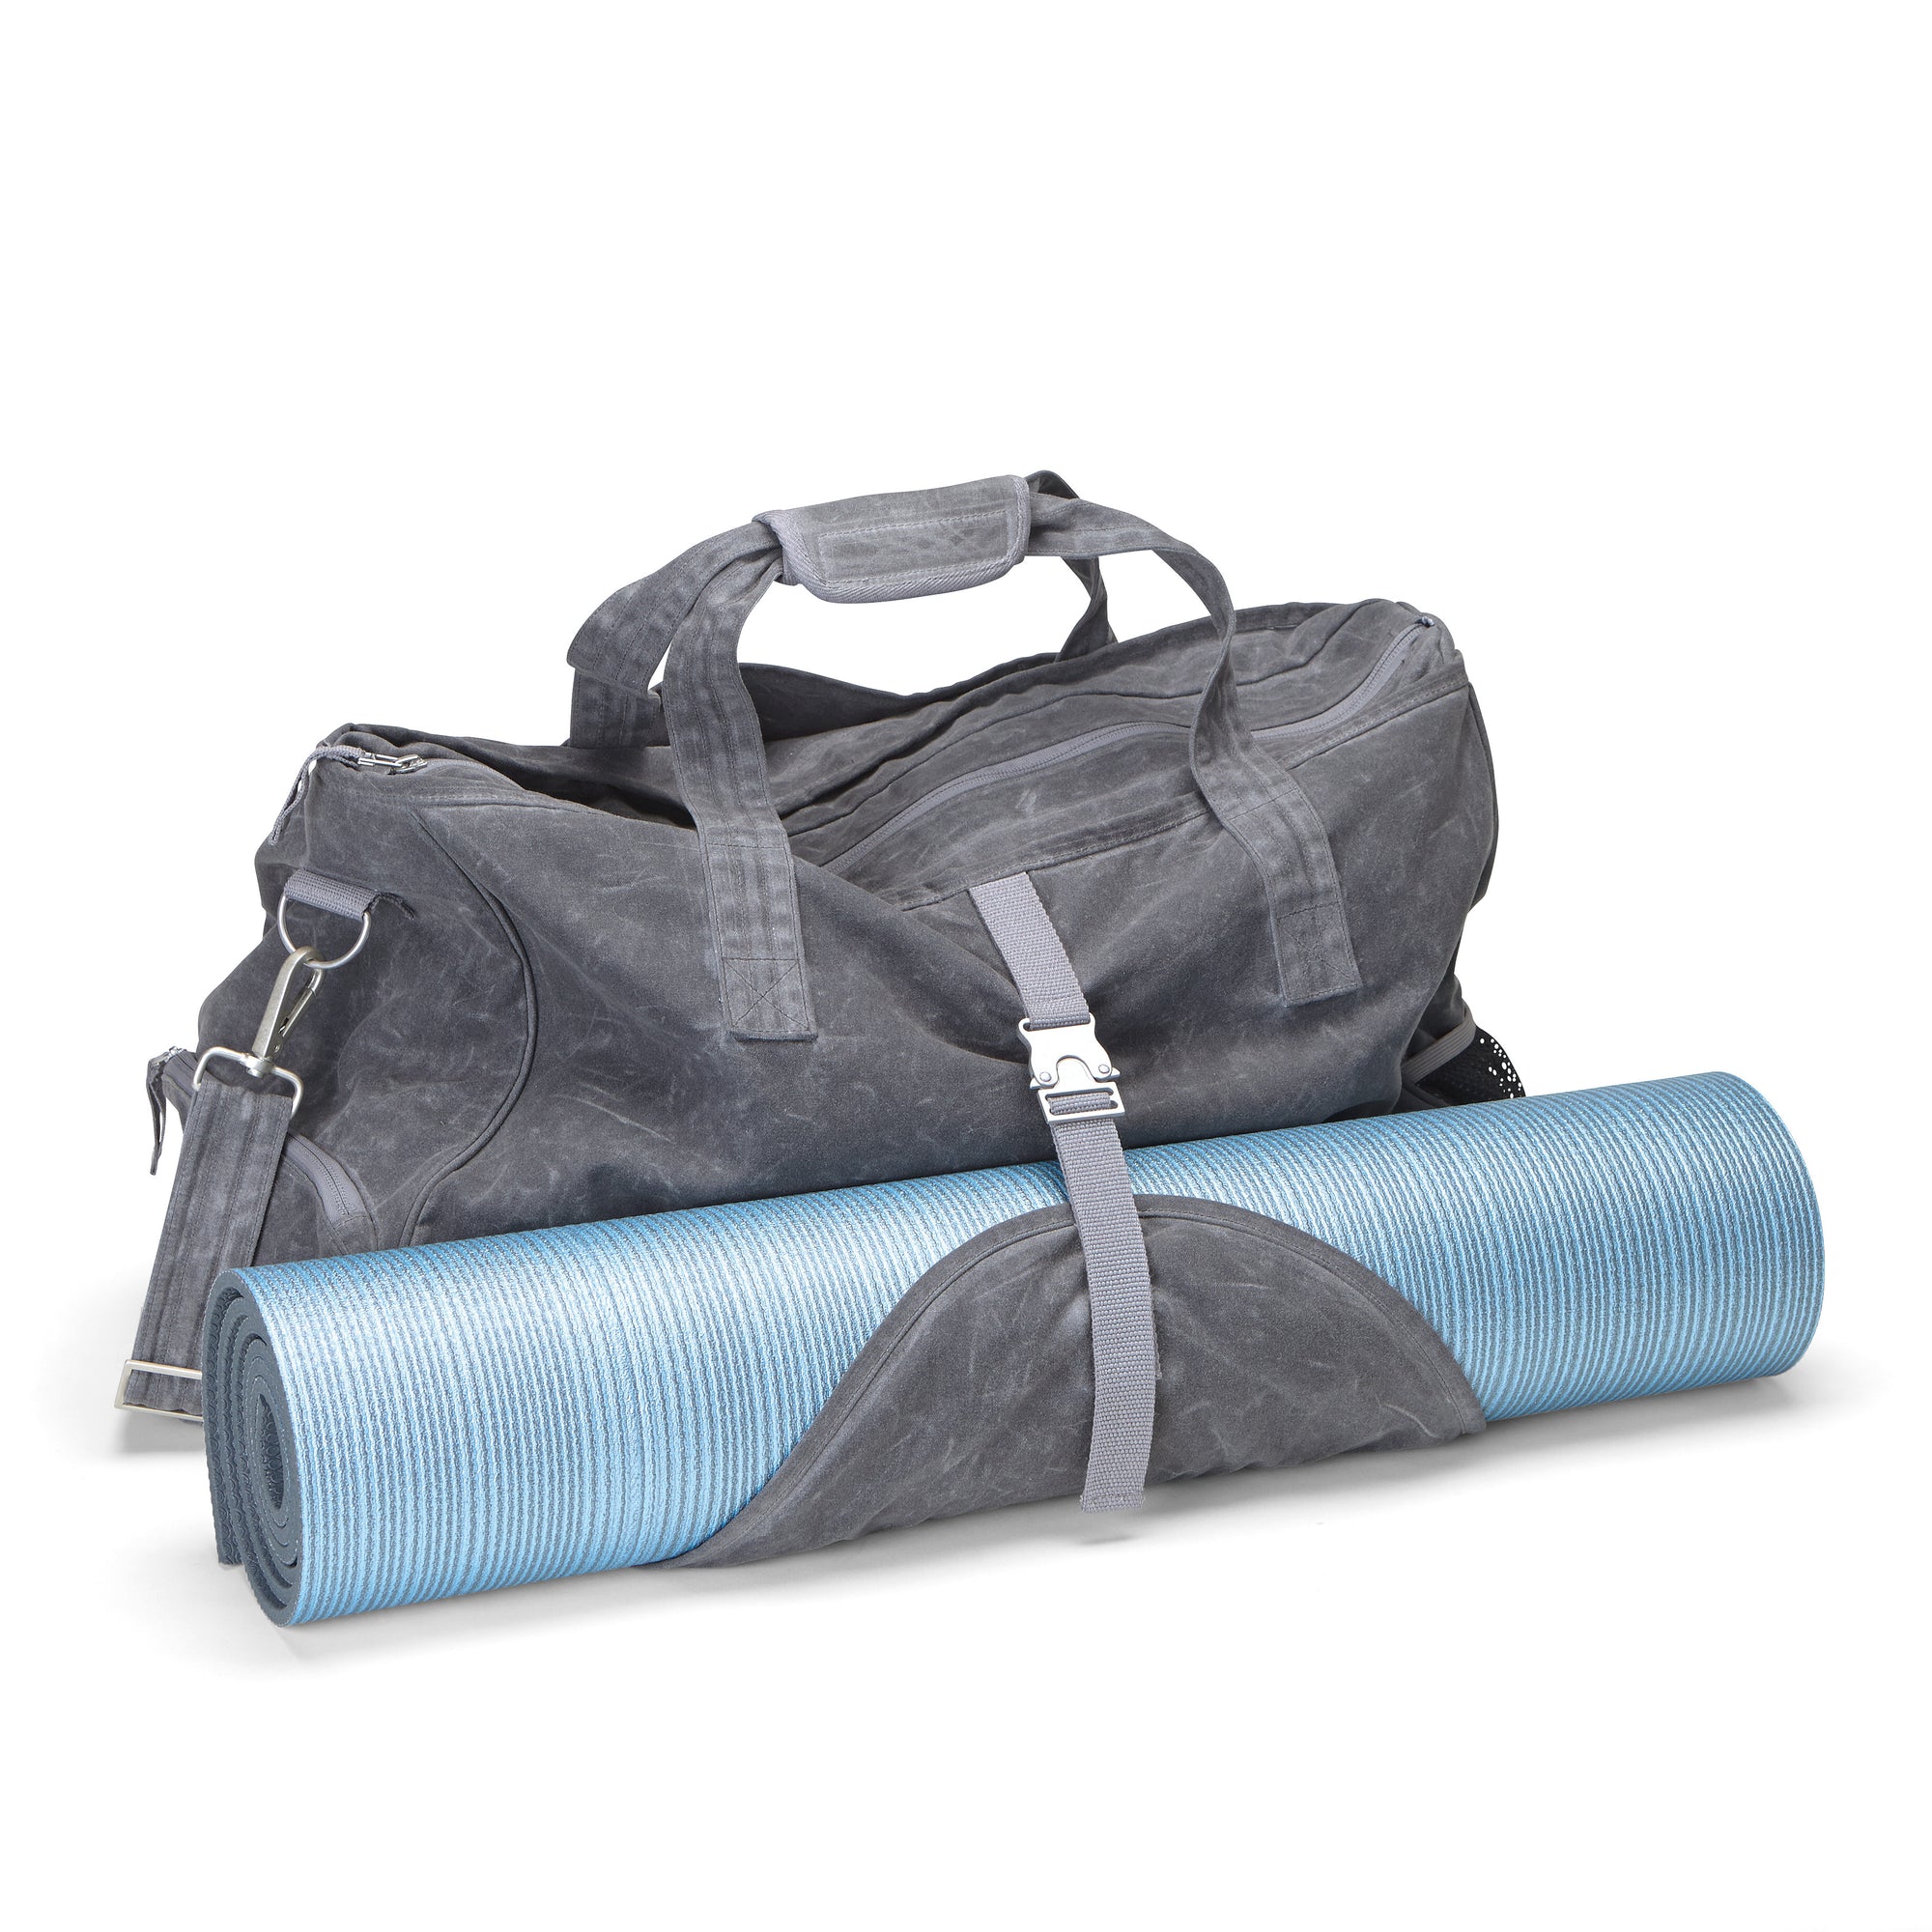 gym bag with yoga mat holder